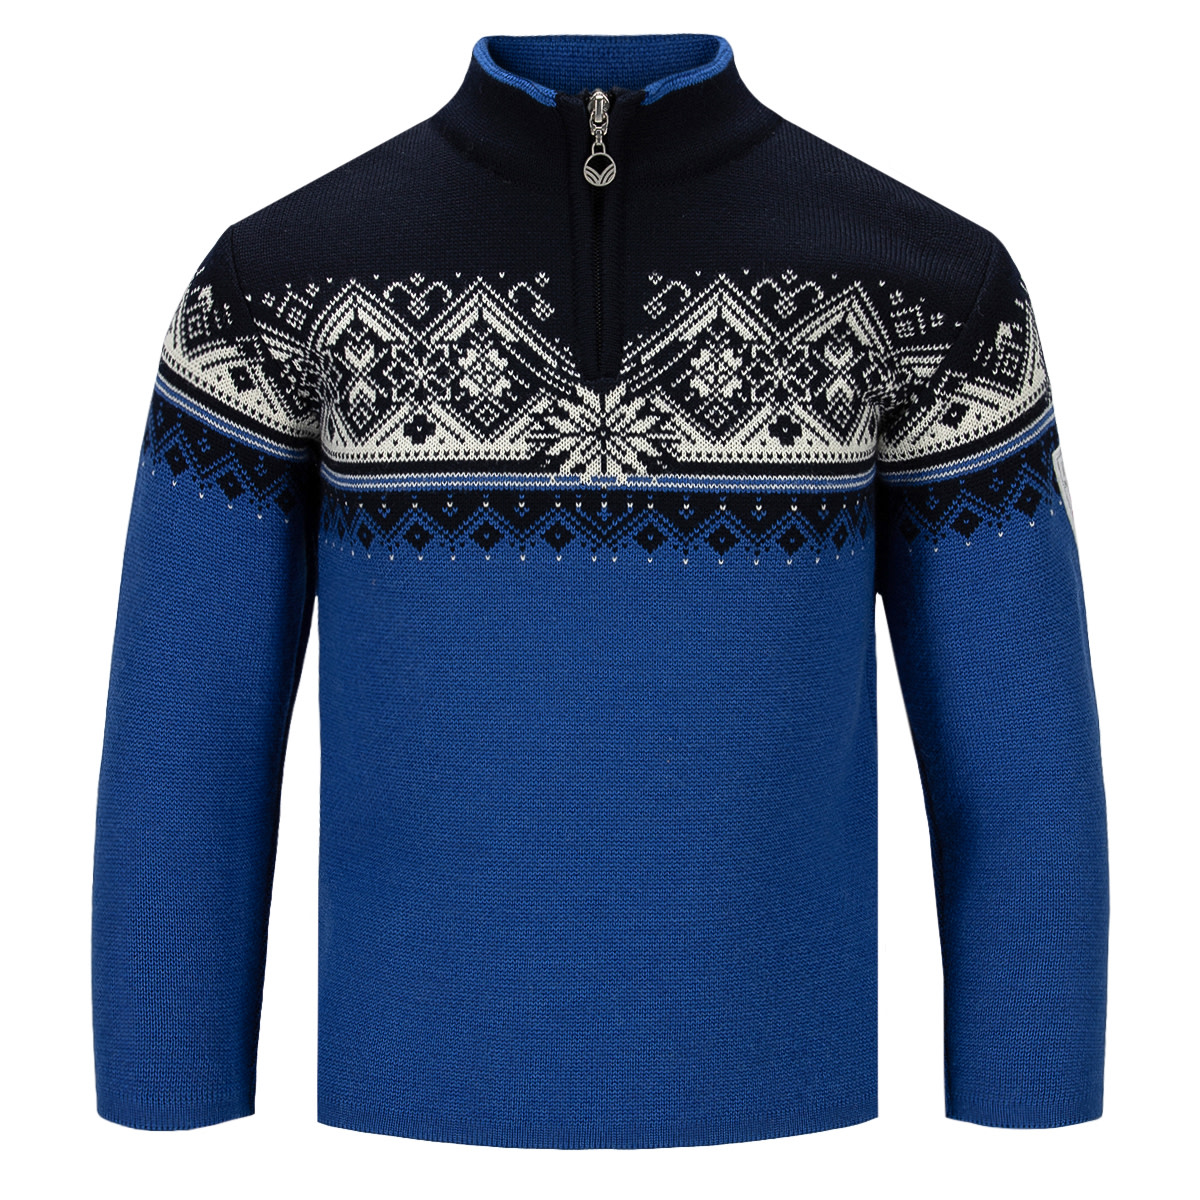 Kids’ Moritz Sweater ULTRAMARINE NAVY GREY OFFWHITE